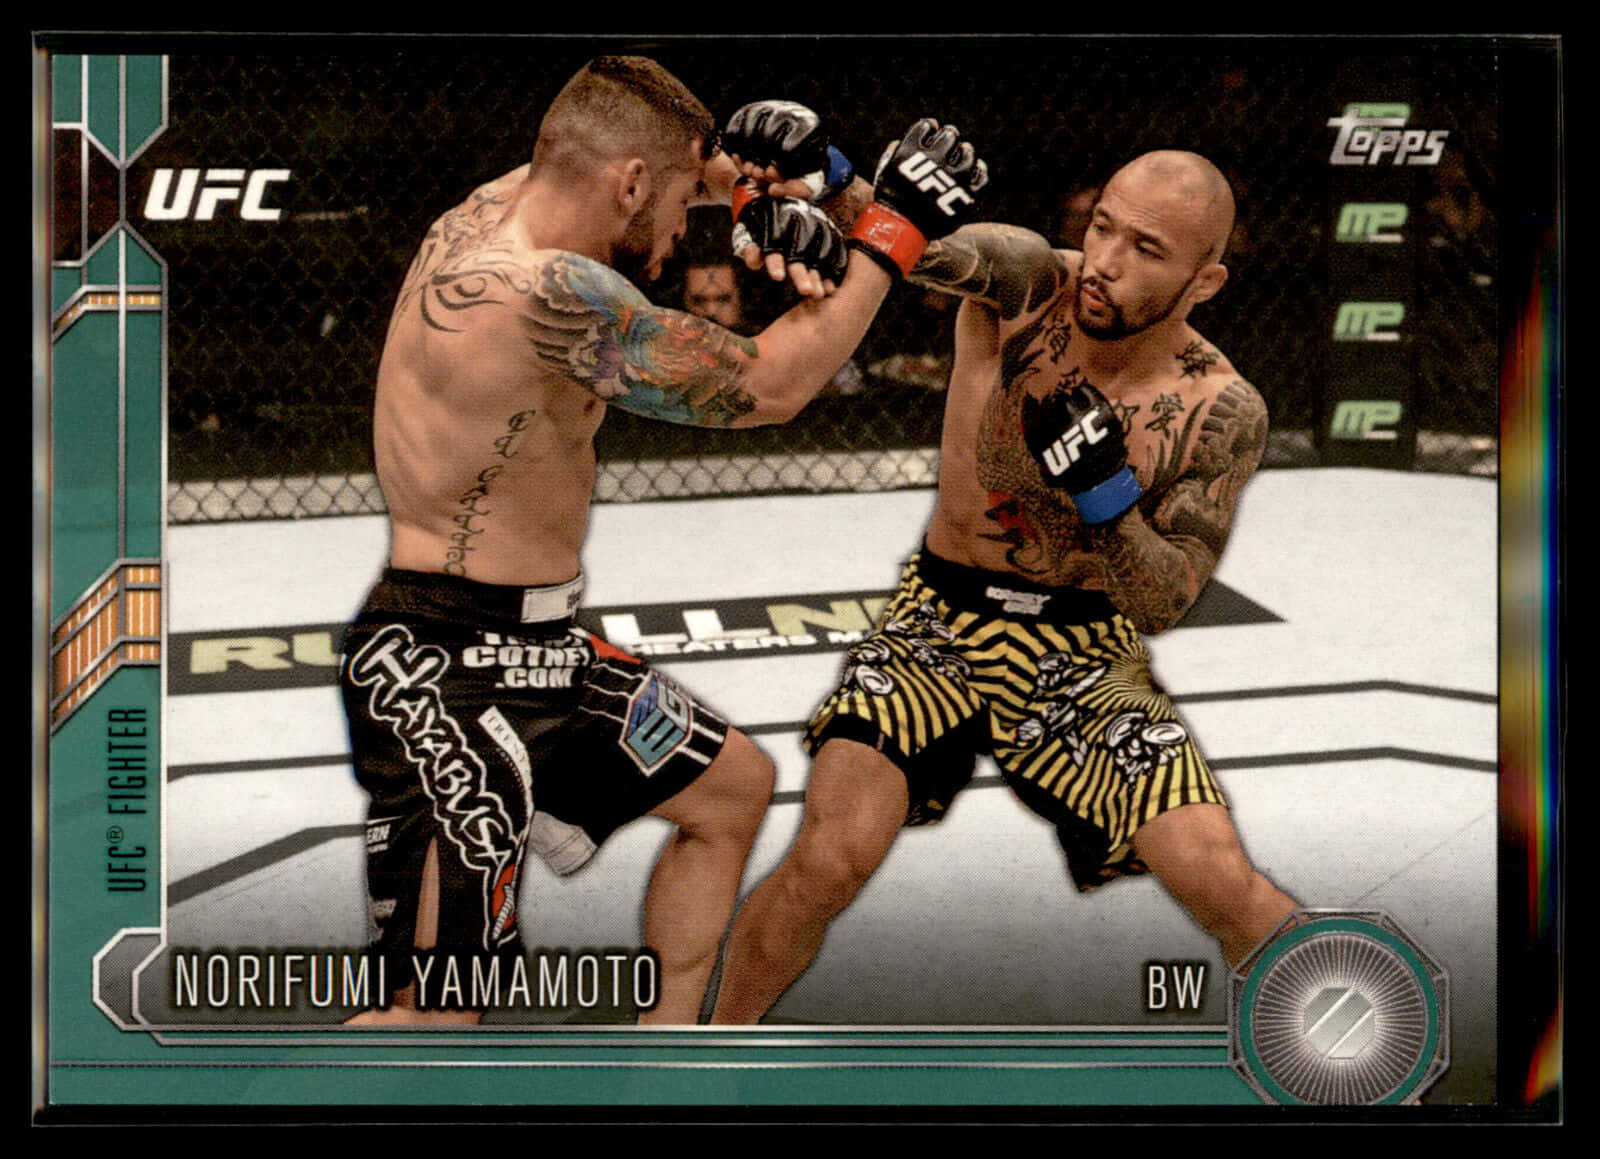 Norifumi Yamamoto versus Roman Salazar in a UFC Fight Illustration Wallpaper